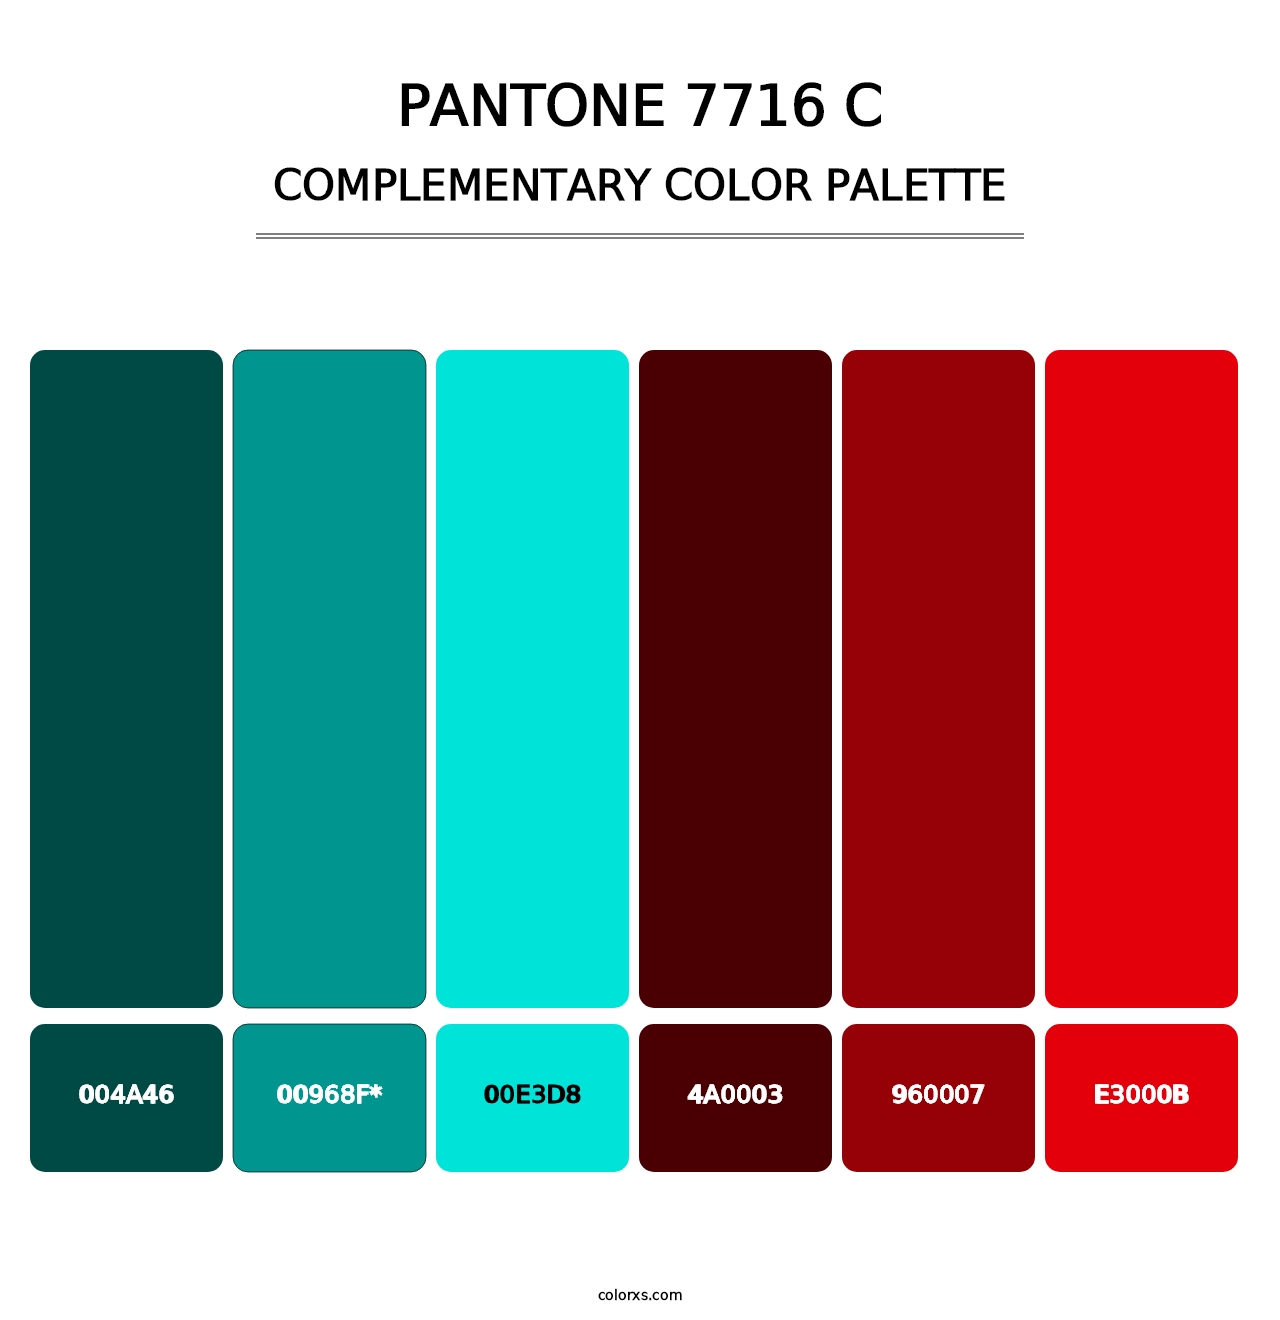 PANTONE 7716 C - Complementary Color Palette